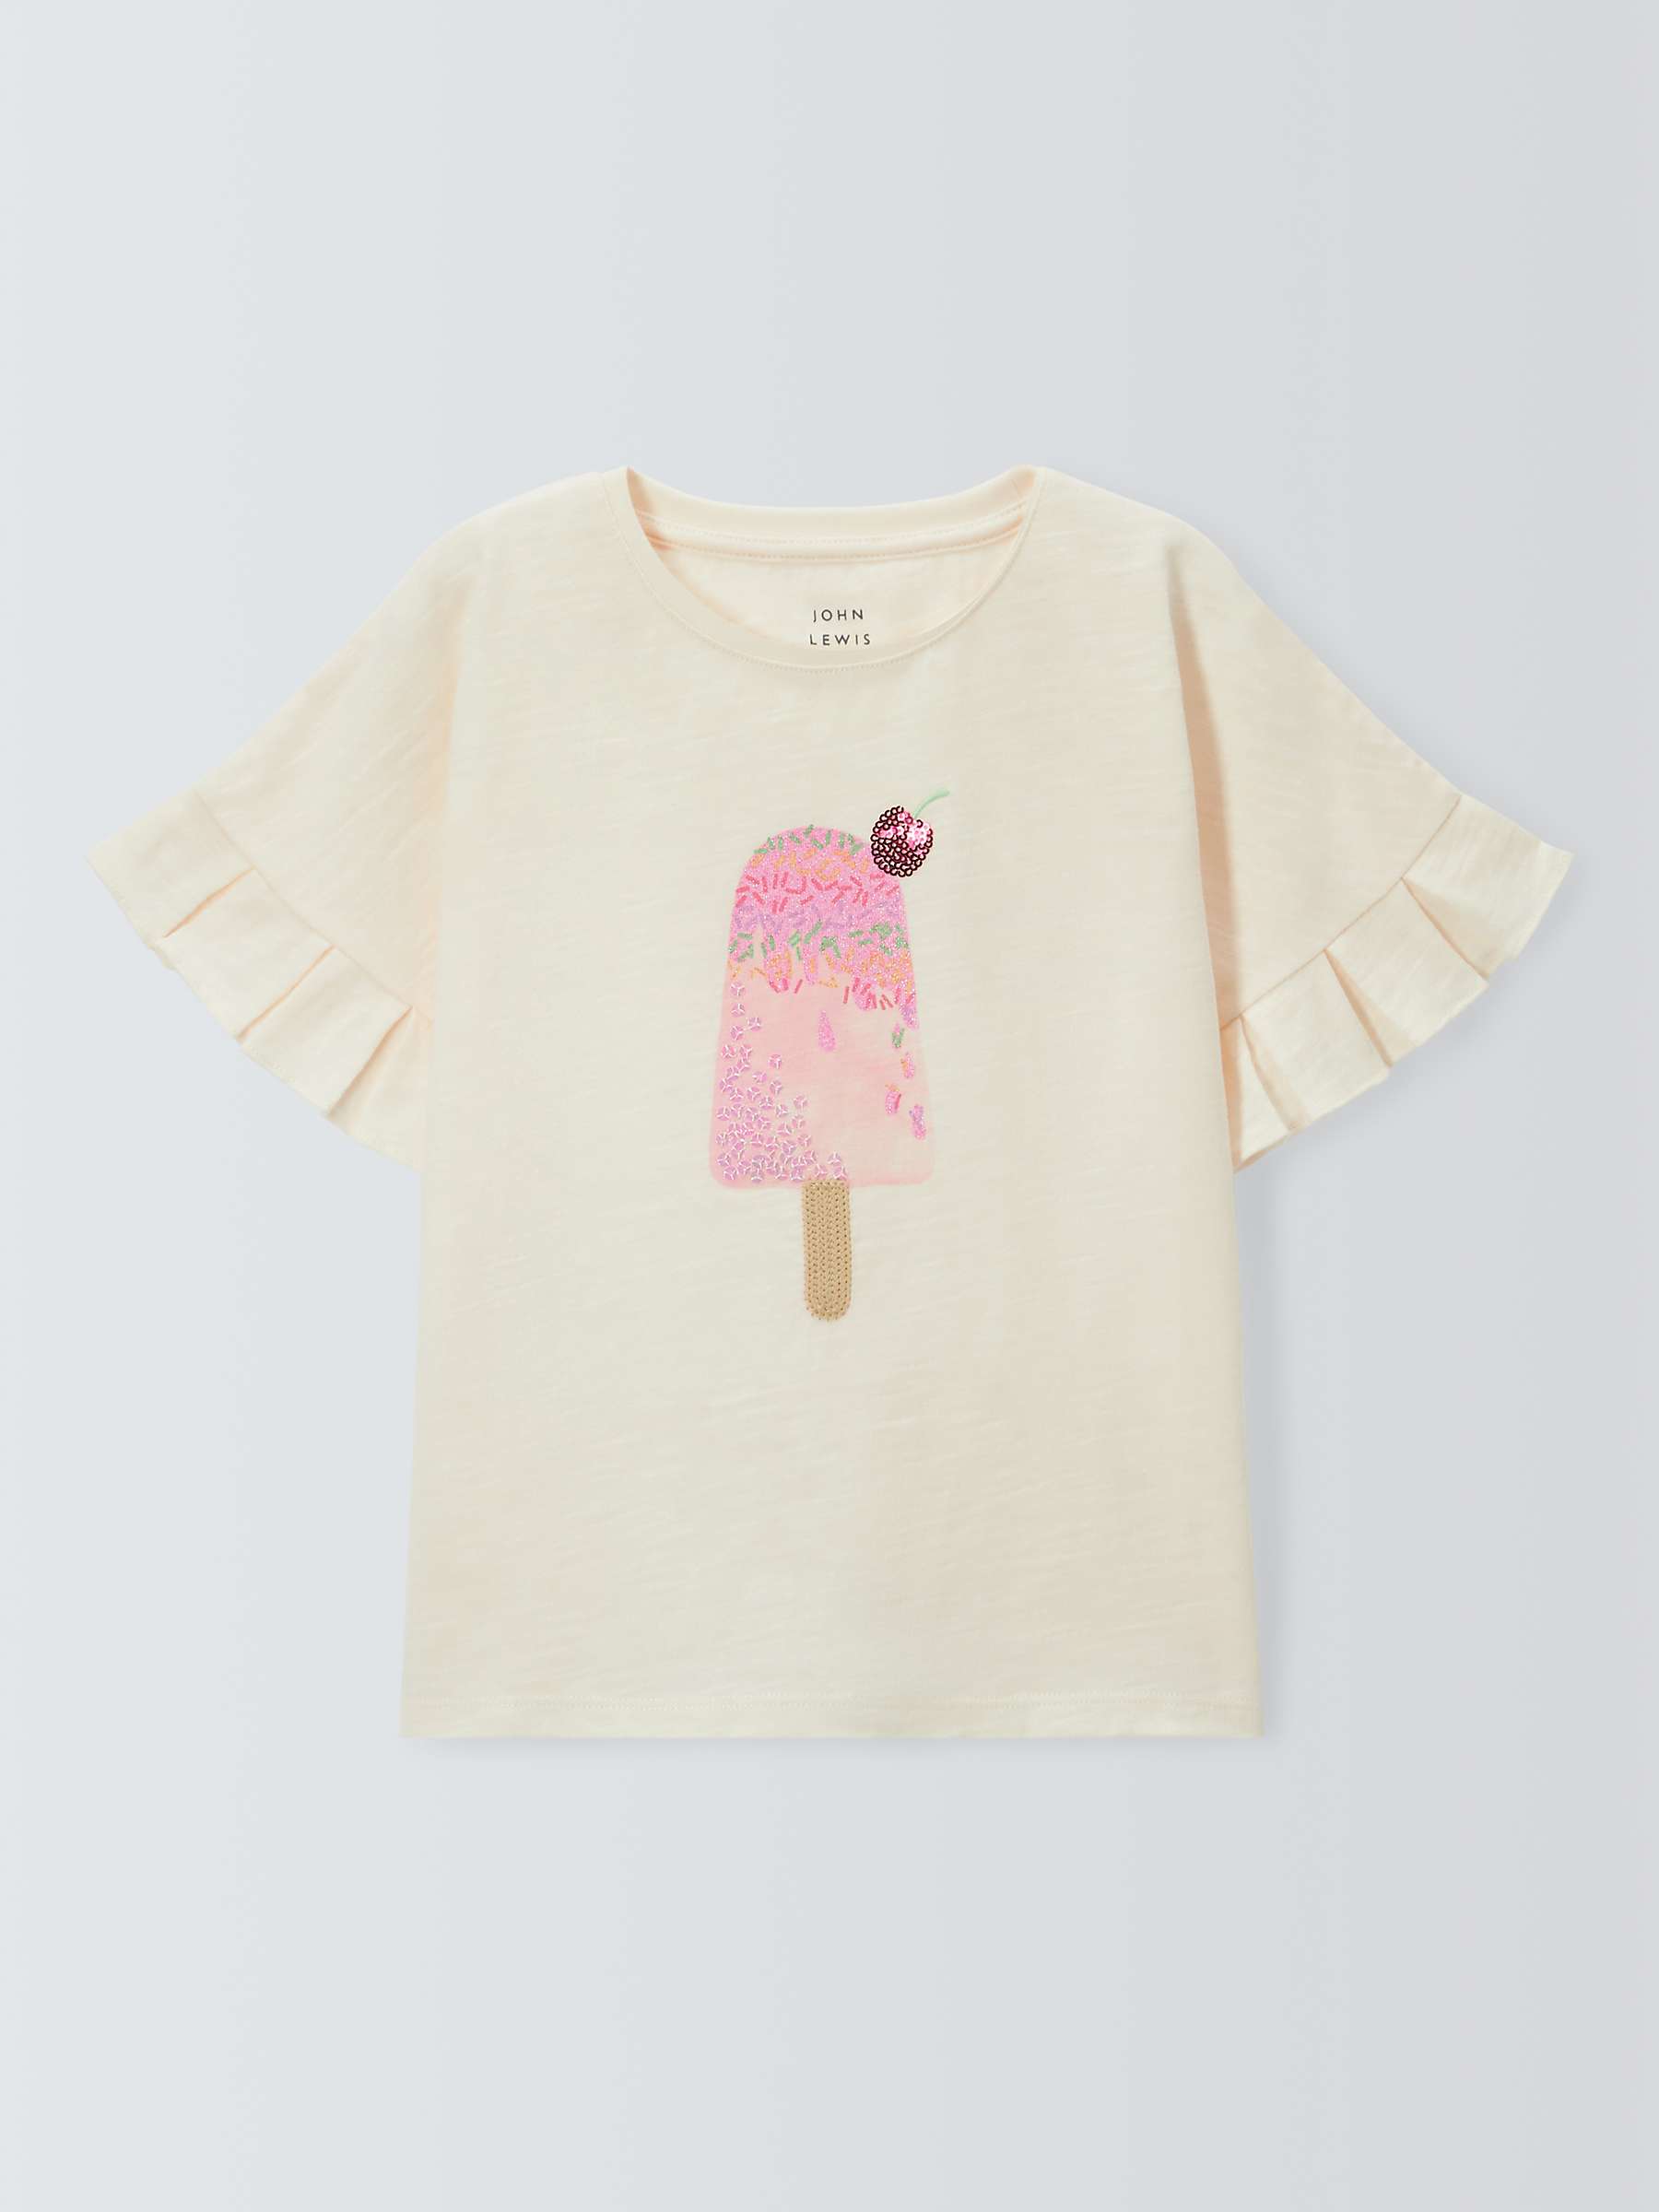 Buy John Lewis Kids' Sequin Ice Lolly T-Shirt, Gardenia Online at johnlewis.com